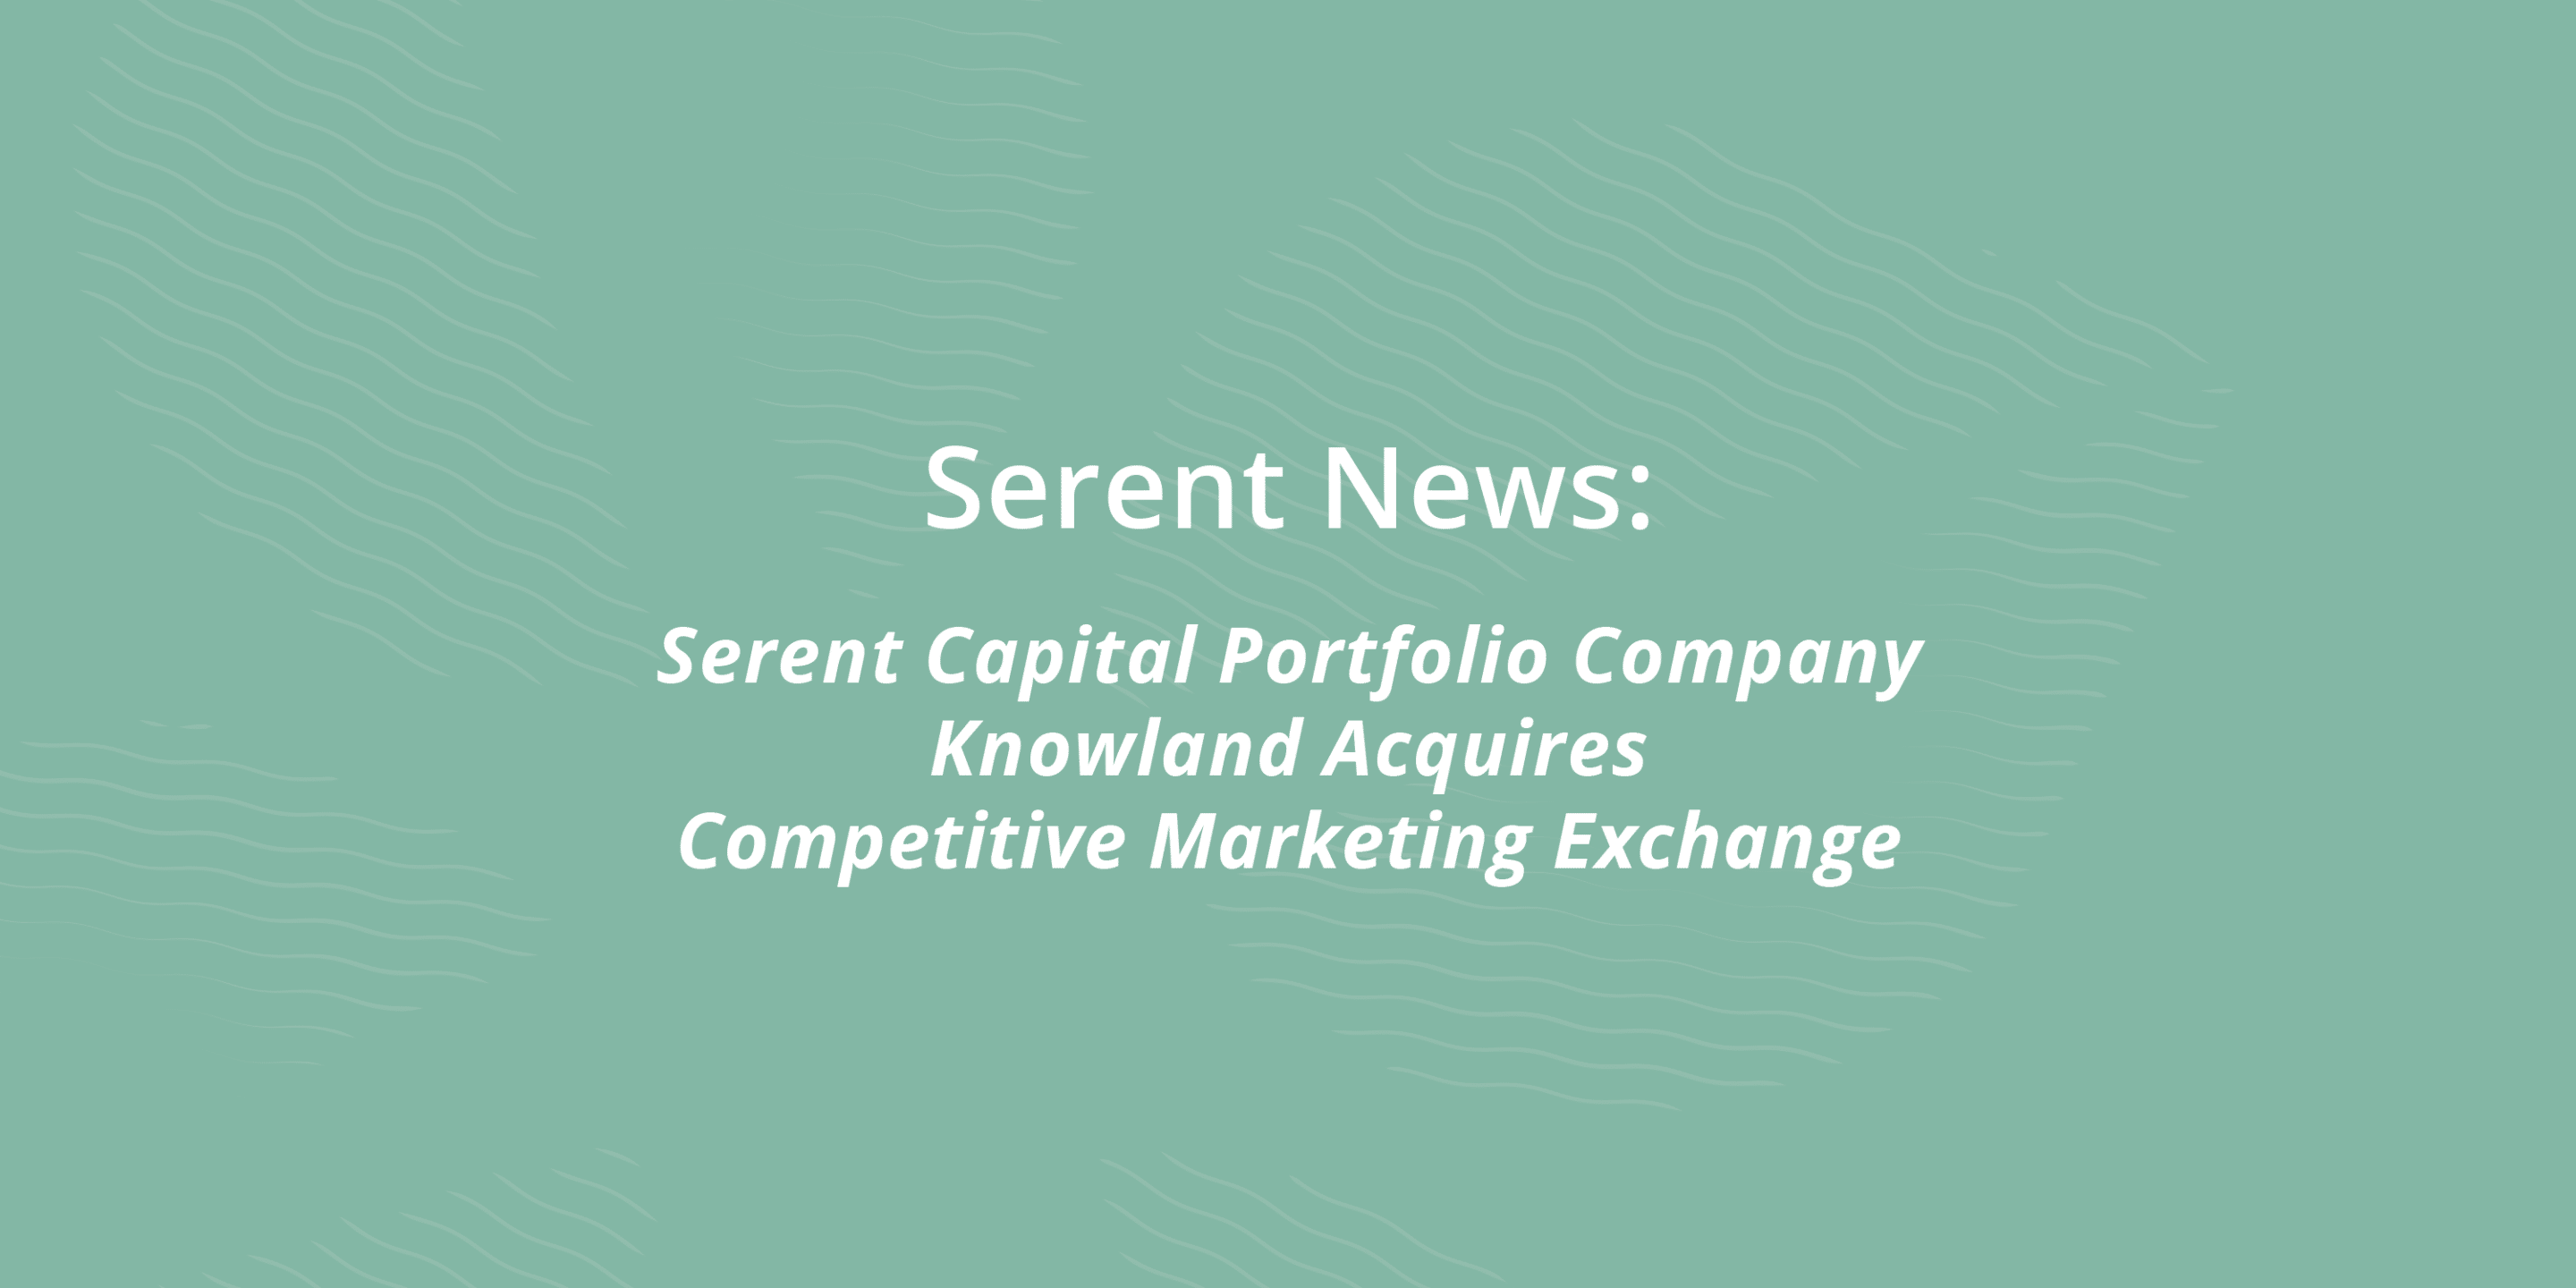 Serent Capital Portfolio Company Knowland Acquires Competitive Marketing Exchange